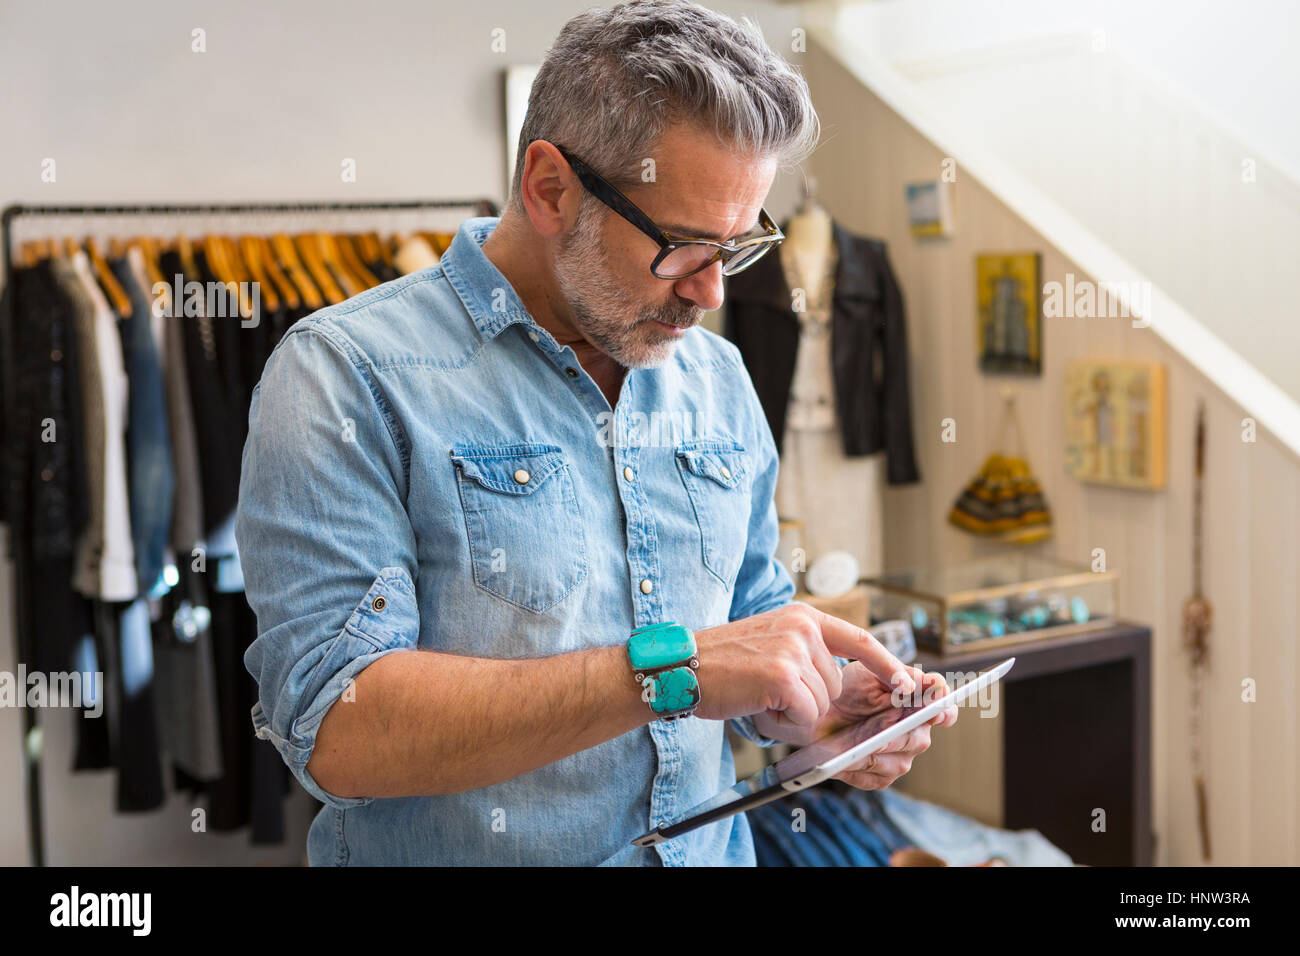 Caucasian man using digital tablet in store Stock Photo